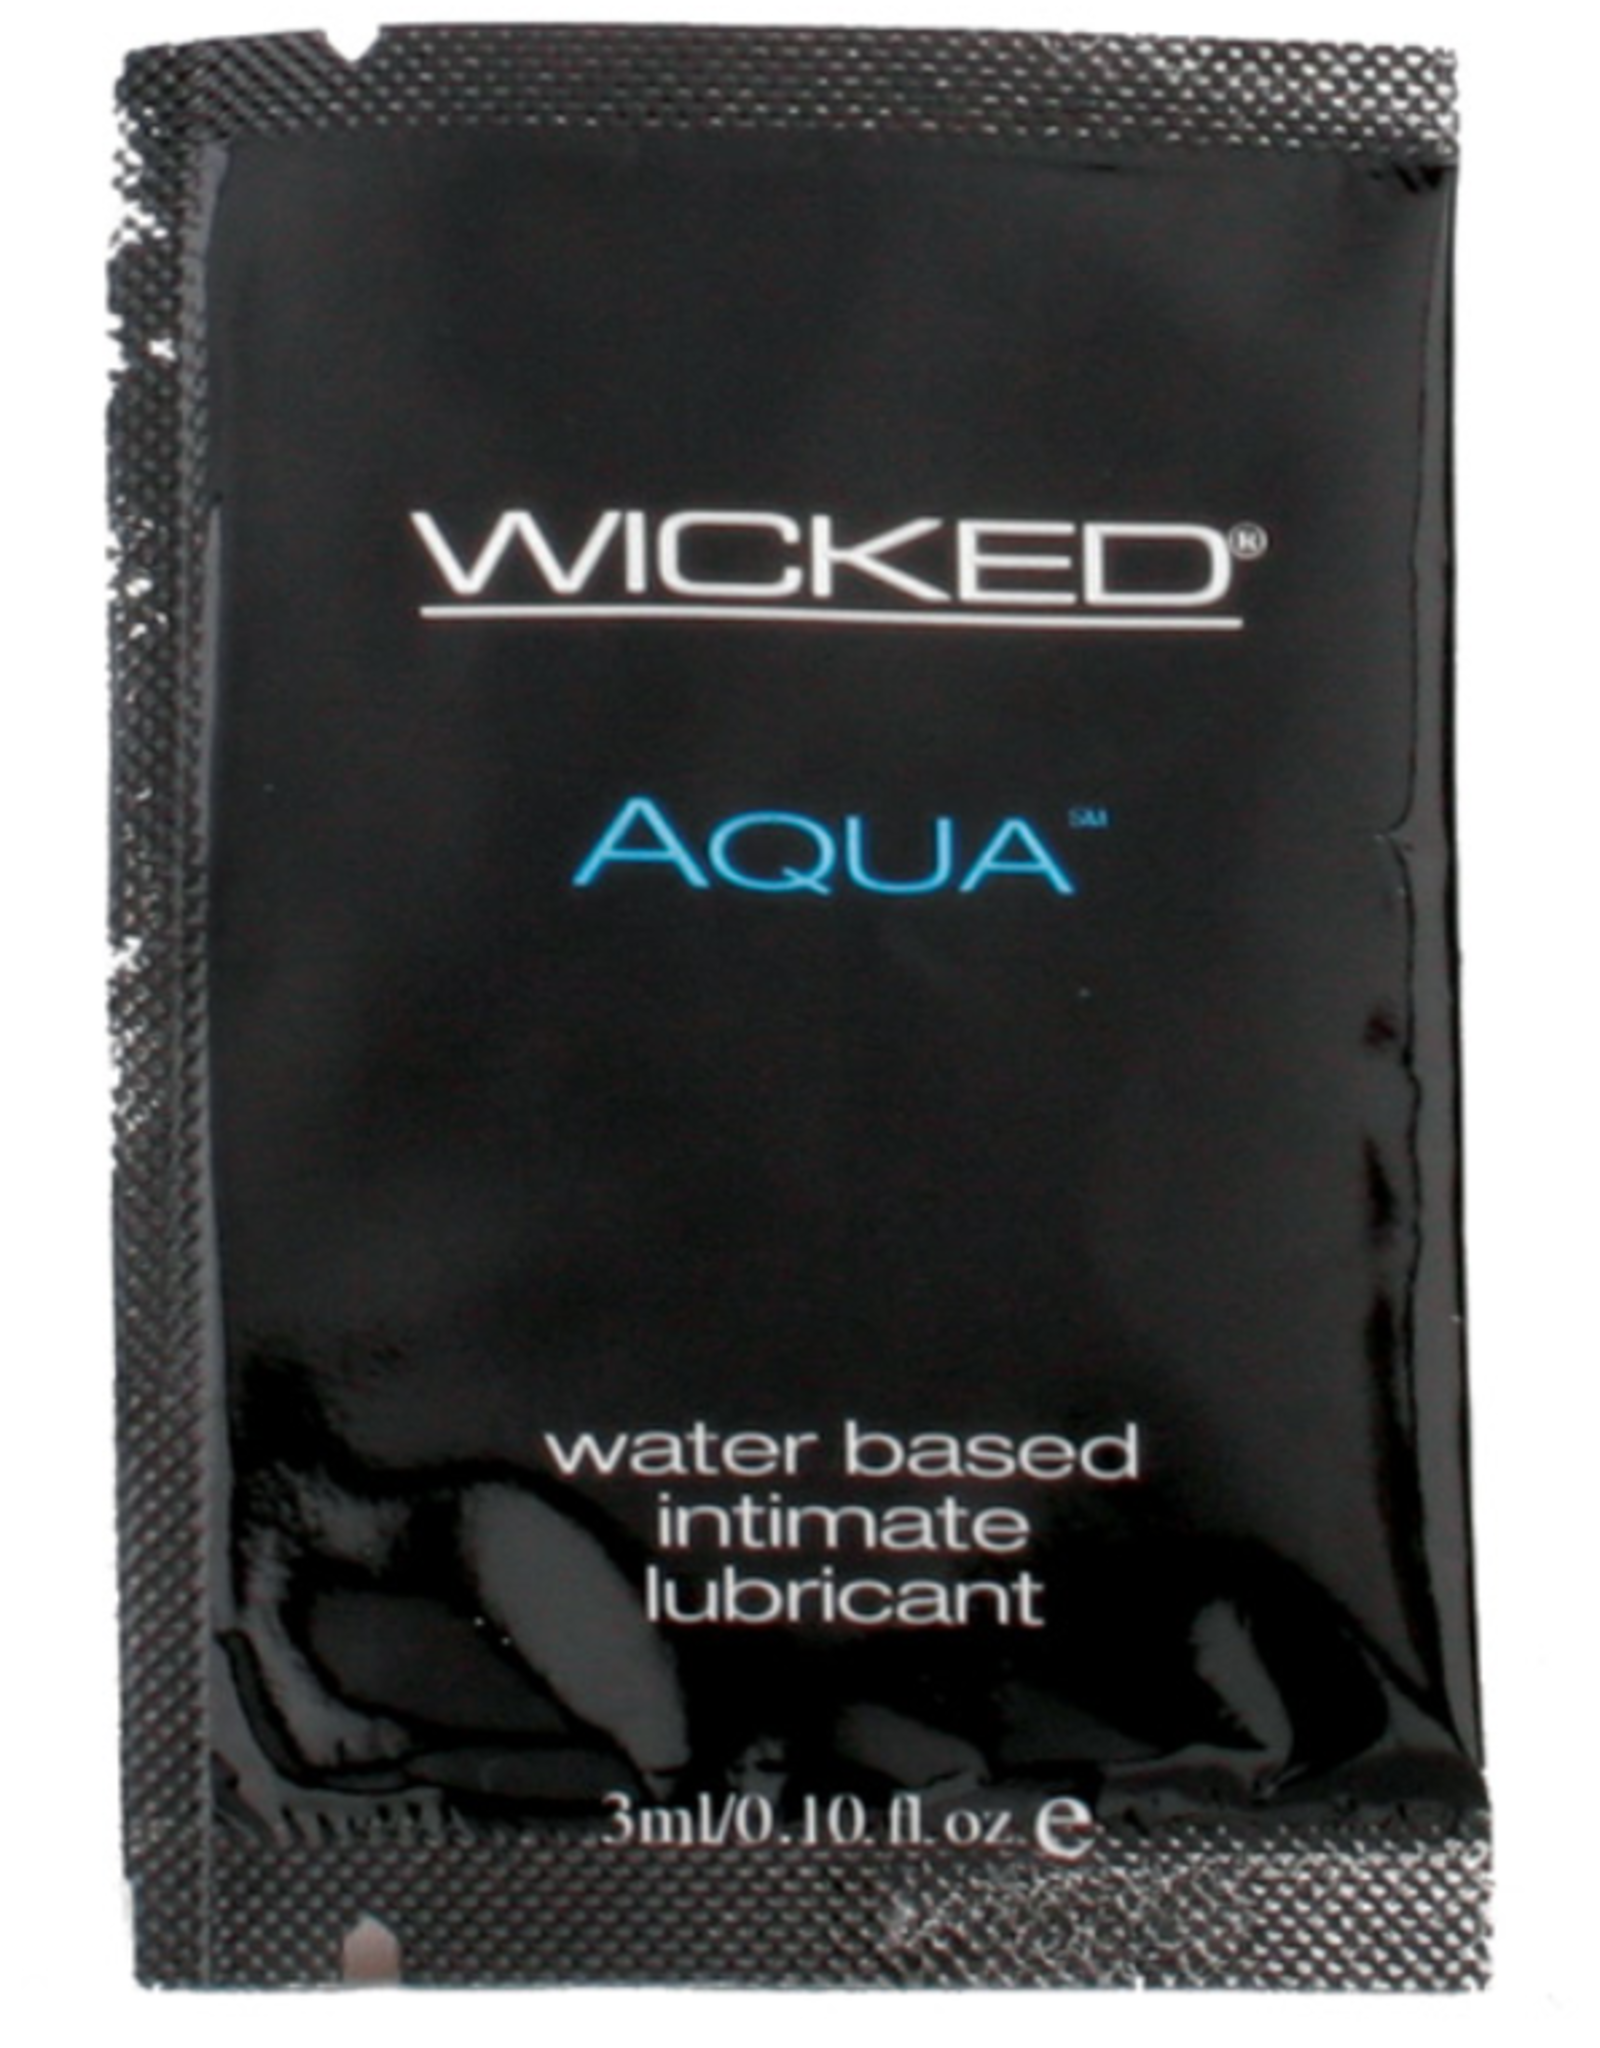 Wicked Sensual Care Aqua Water Based Lubricant - .1 oz Fragrance Free